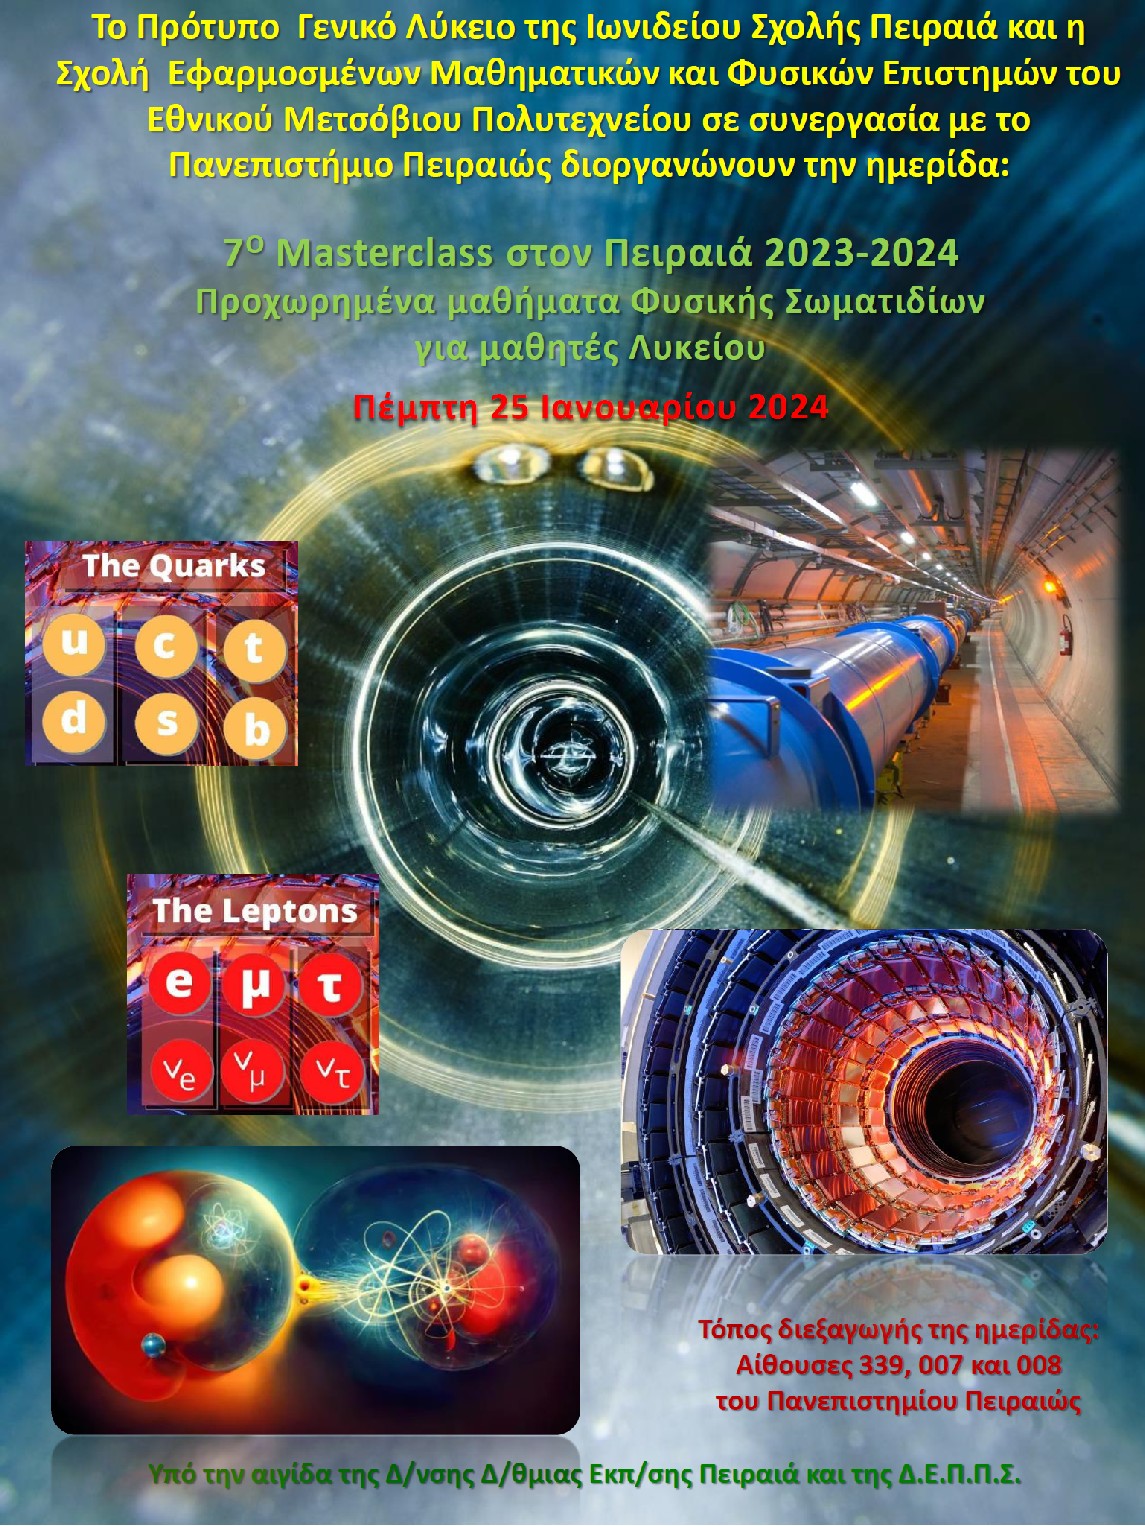 7o Masterclass στον Πειραιά 2023-2024: Προχωρημένα μαθήματα Φυσικής Σωματιδίων για μαθητές Λυκείου